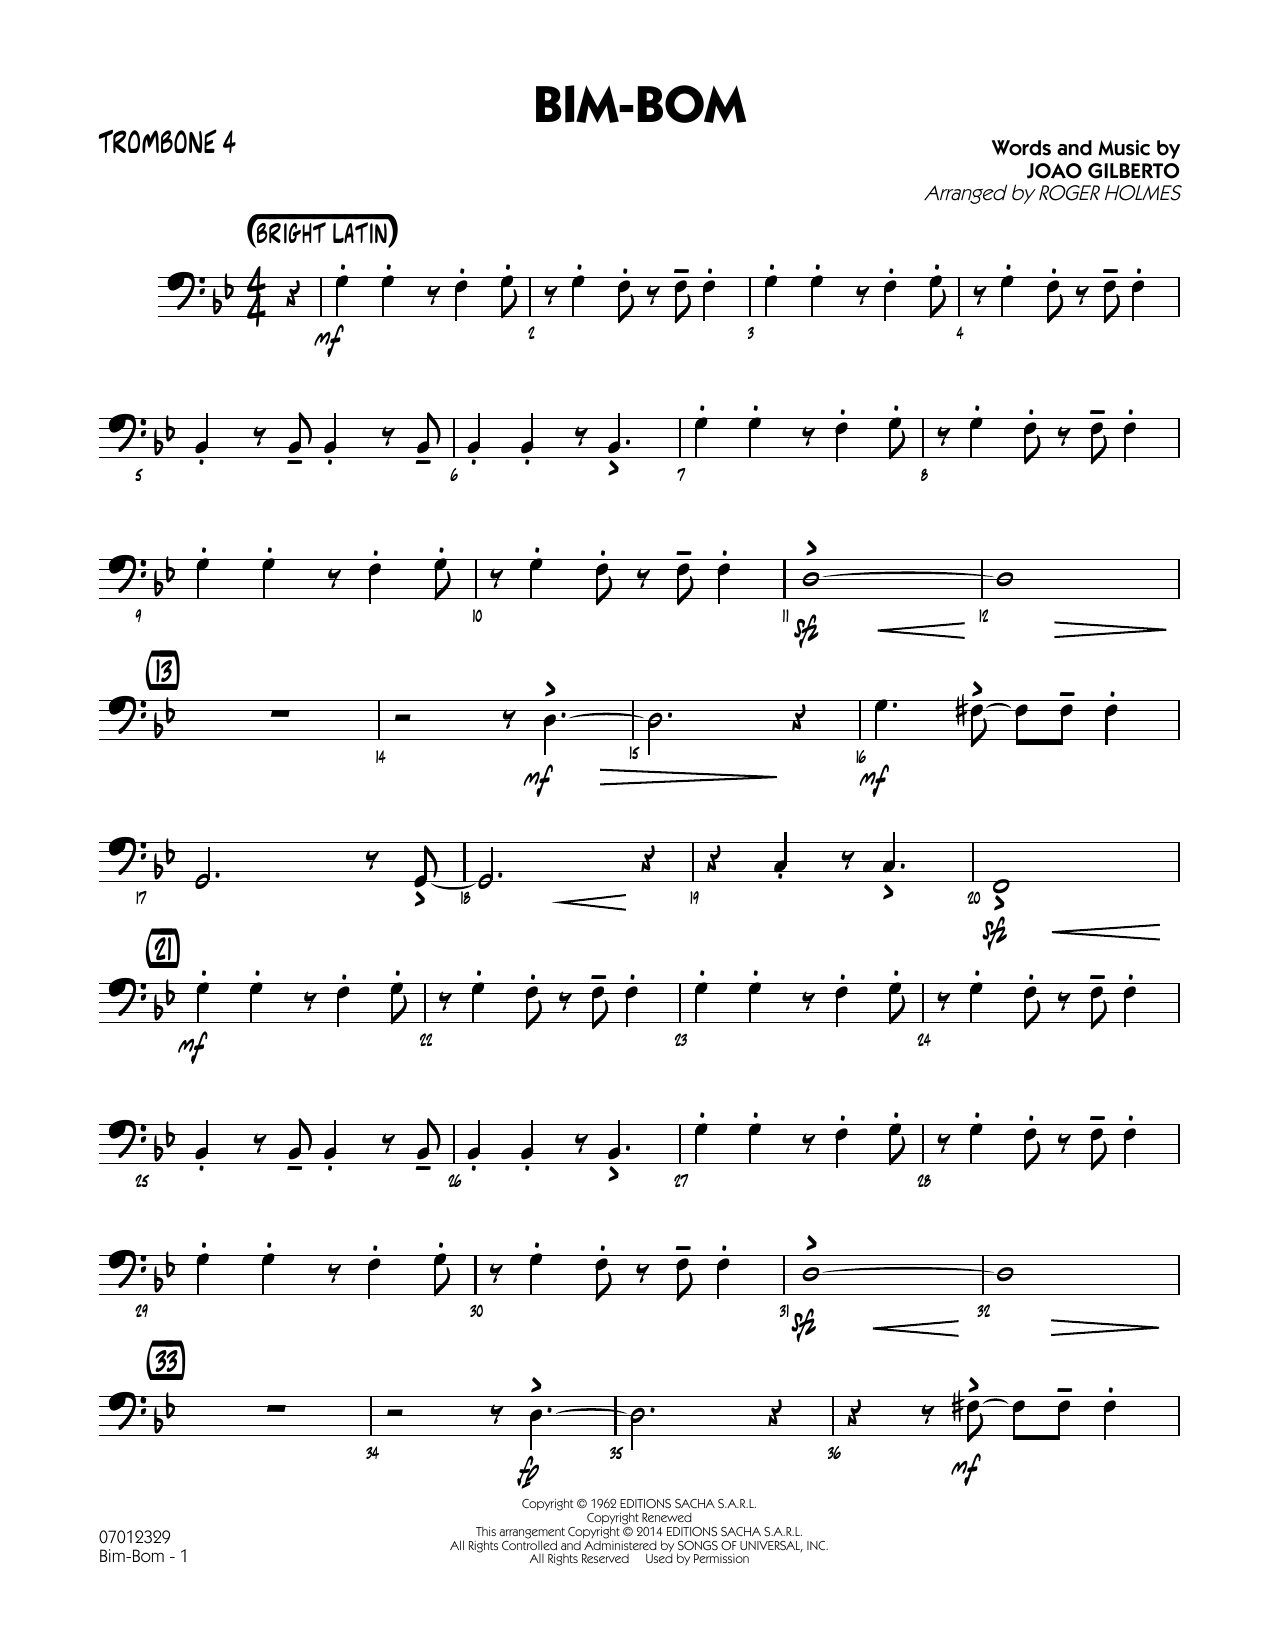 Roger Holmes Bim-Bom - Trombone 4 sheet music notes and chords. Download Printable PDF.